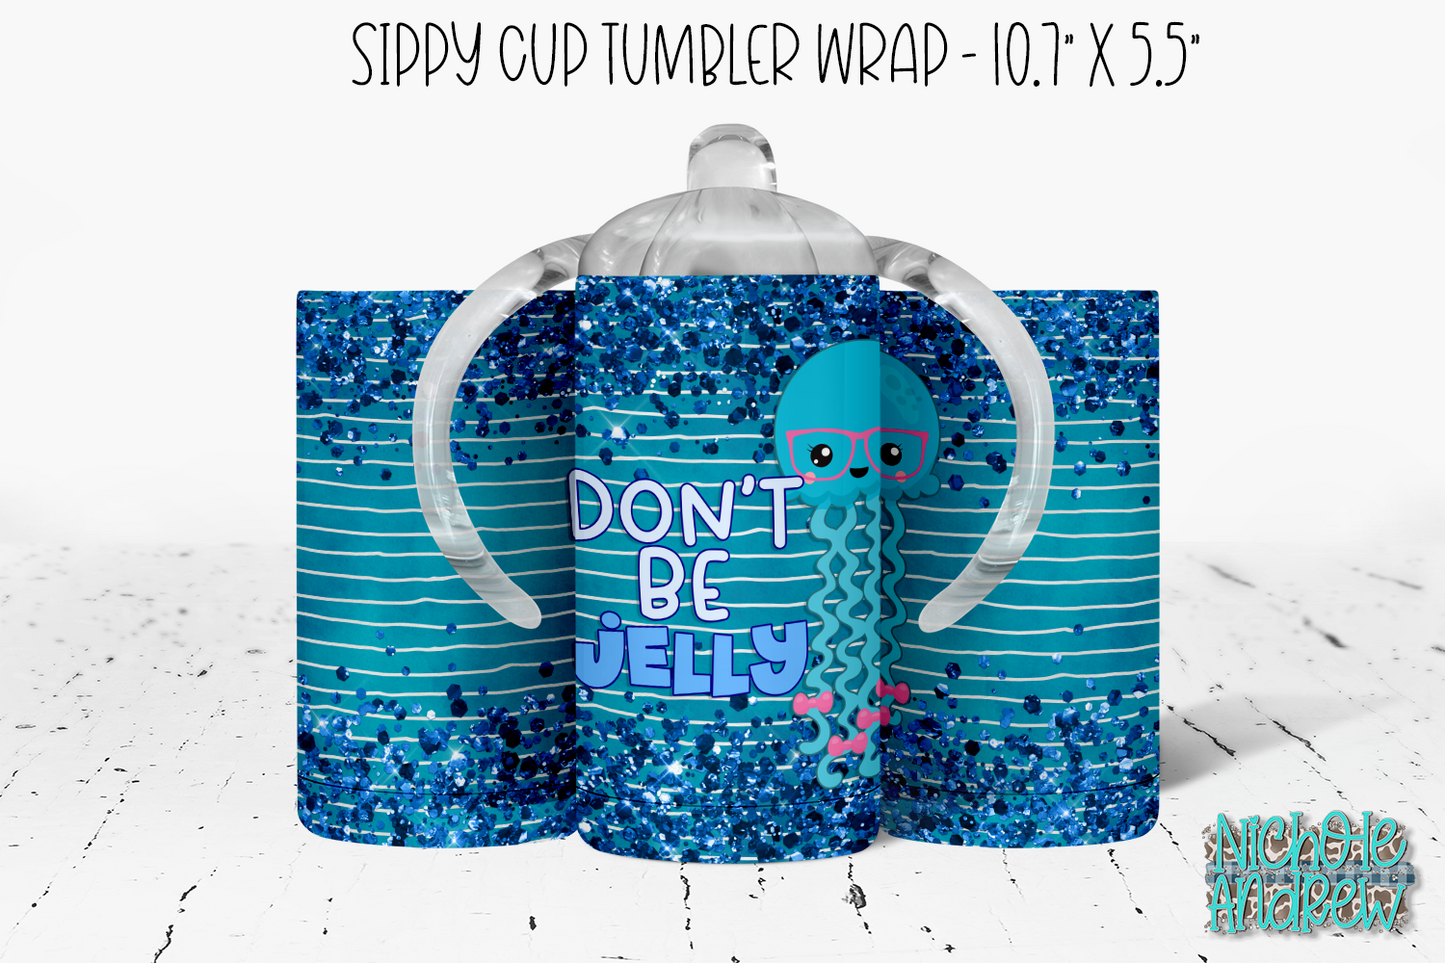 Sublimation Sippy Cup Bundle Vol. 2